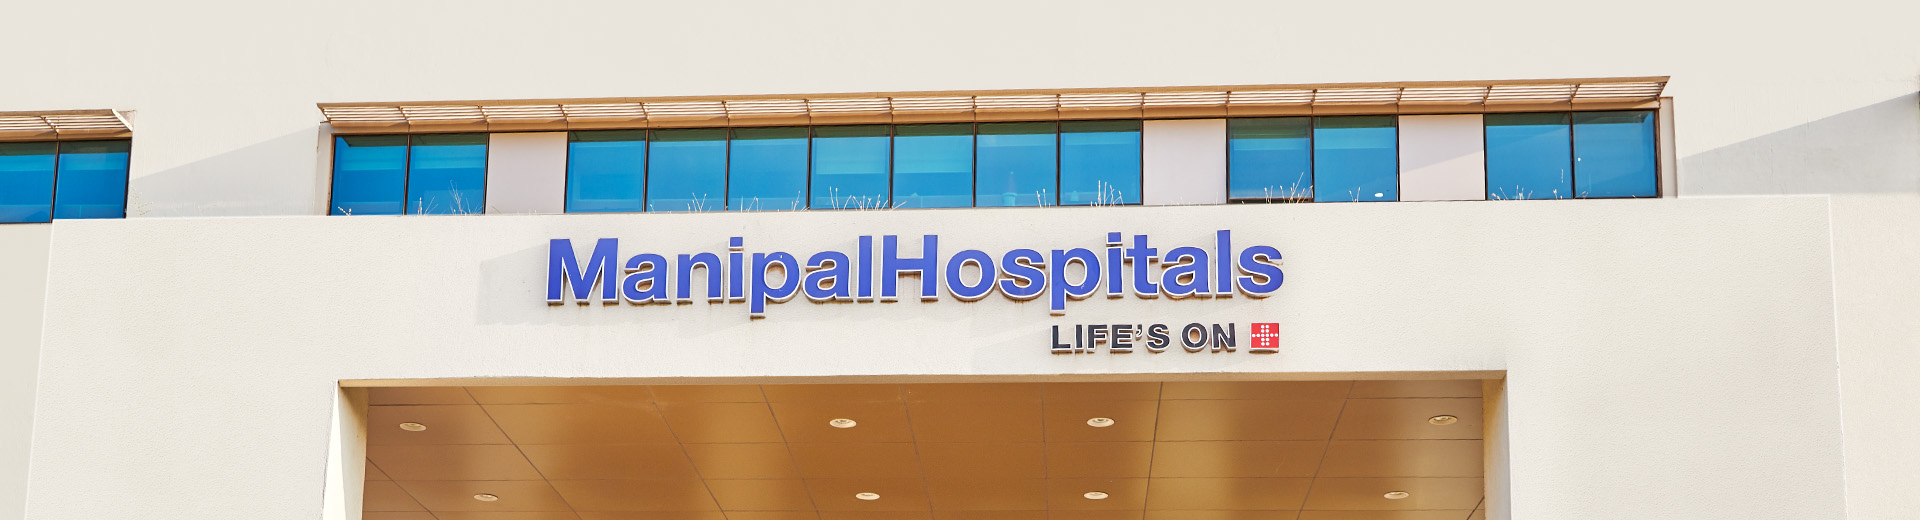 Privacy Policy | Manipal Hospitals Vidhyadhar Nagar, Jaipur